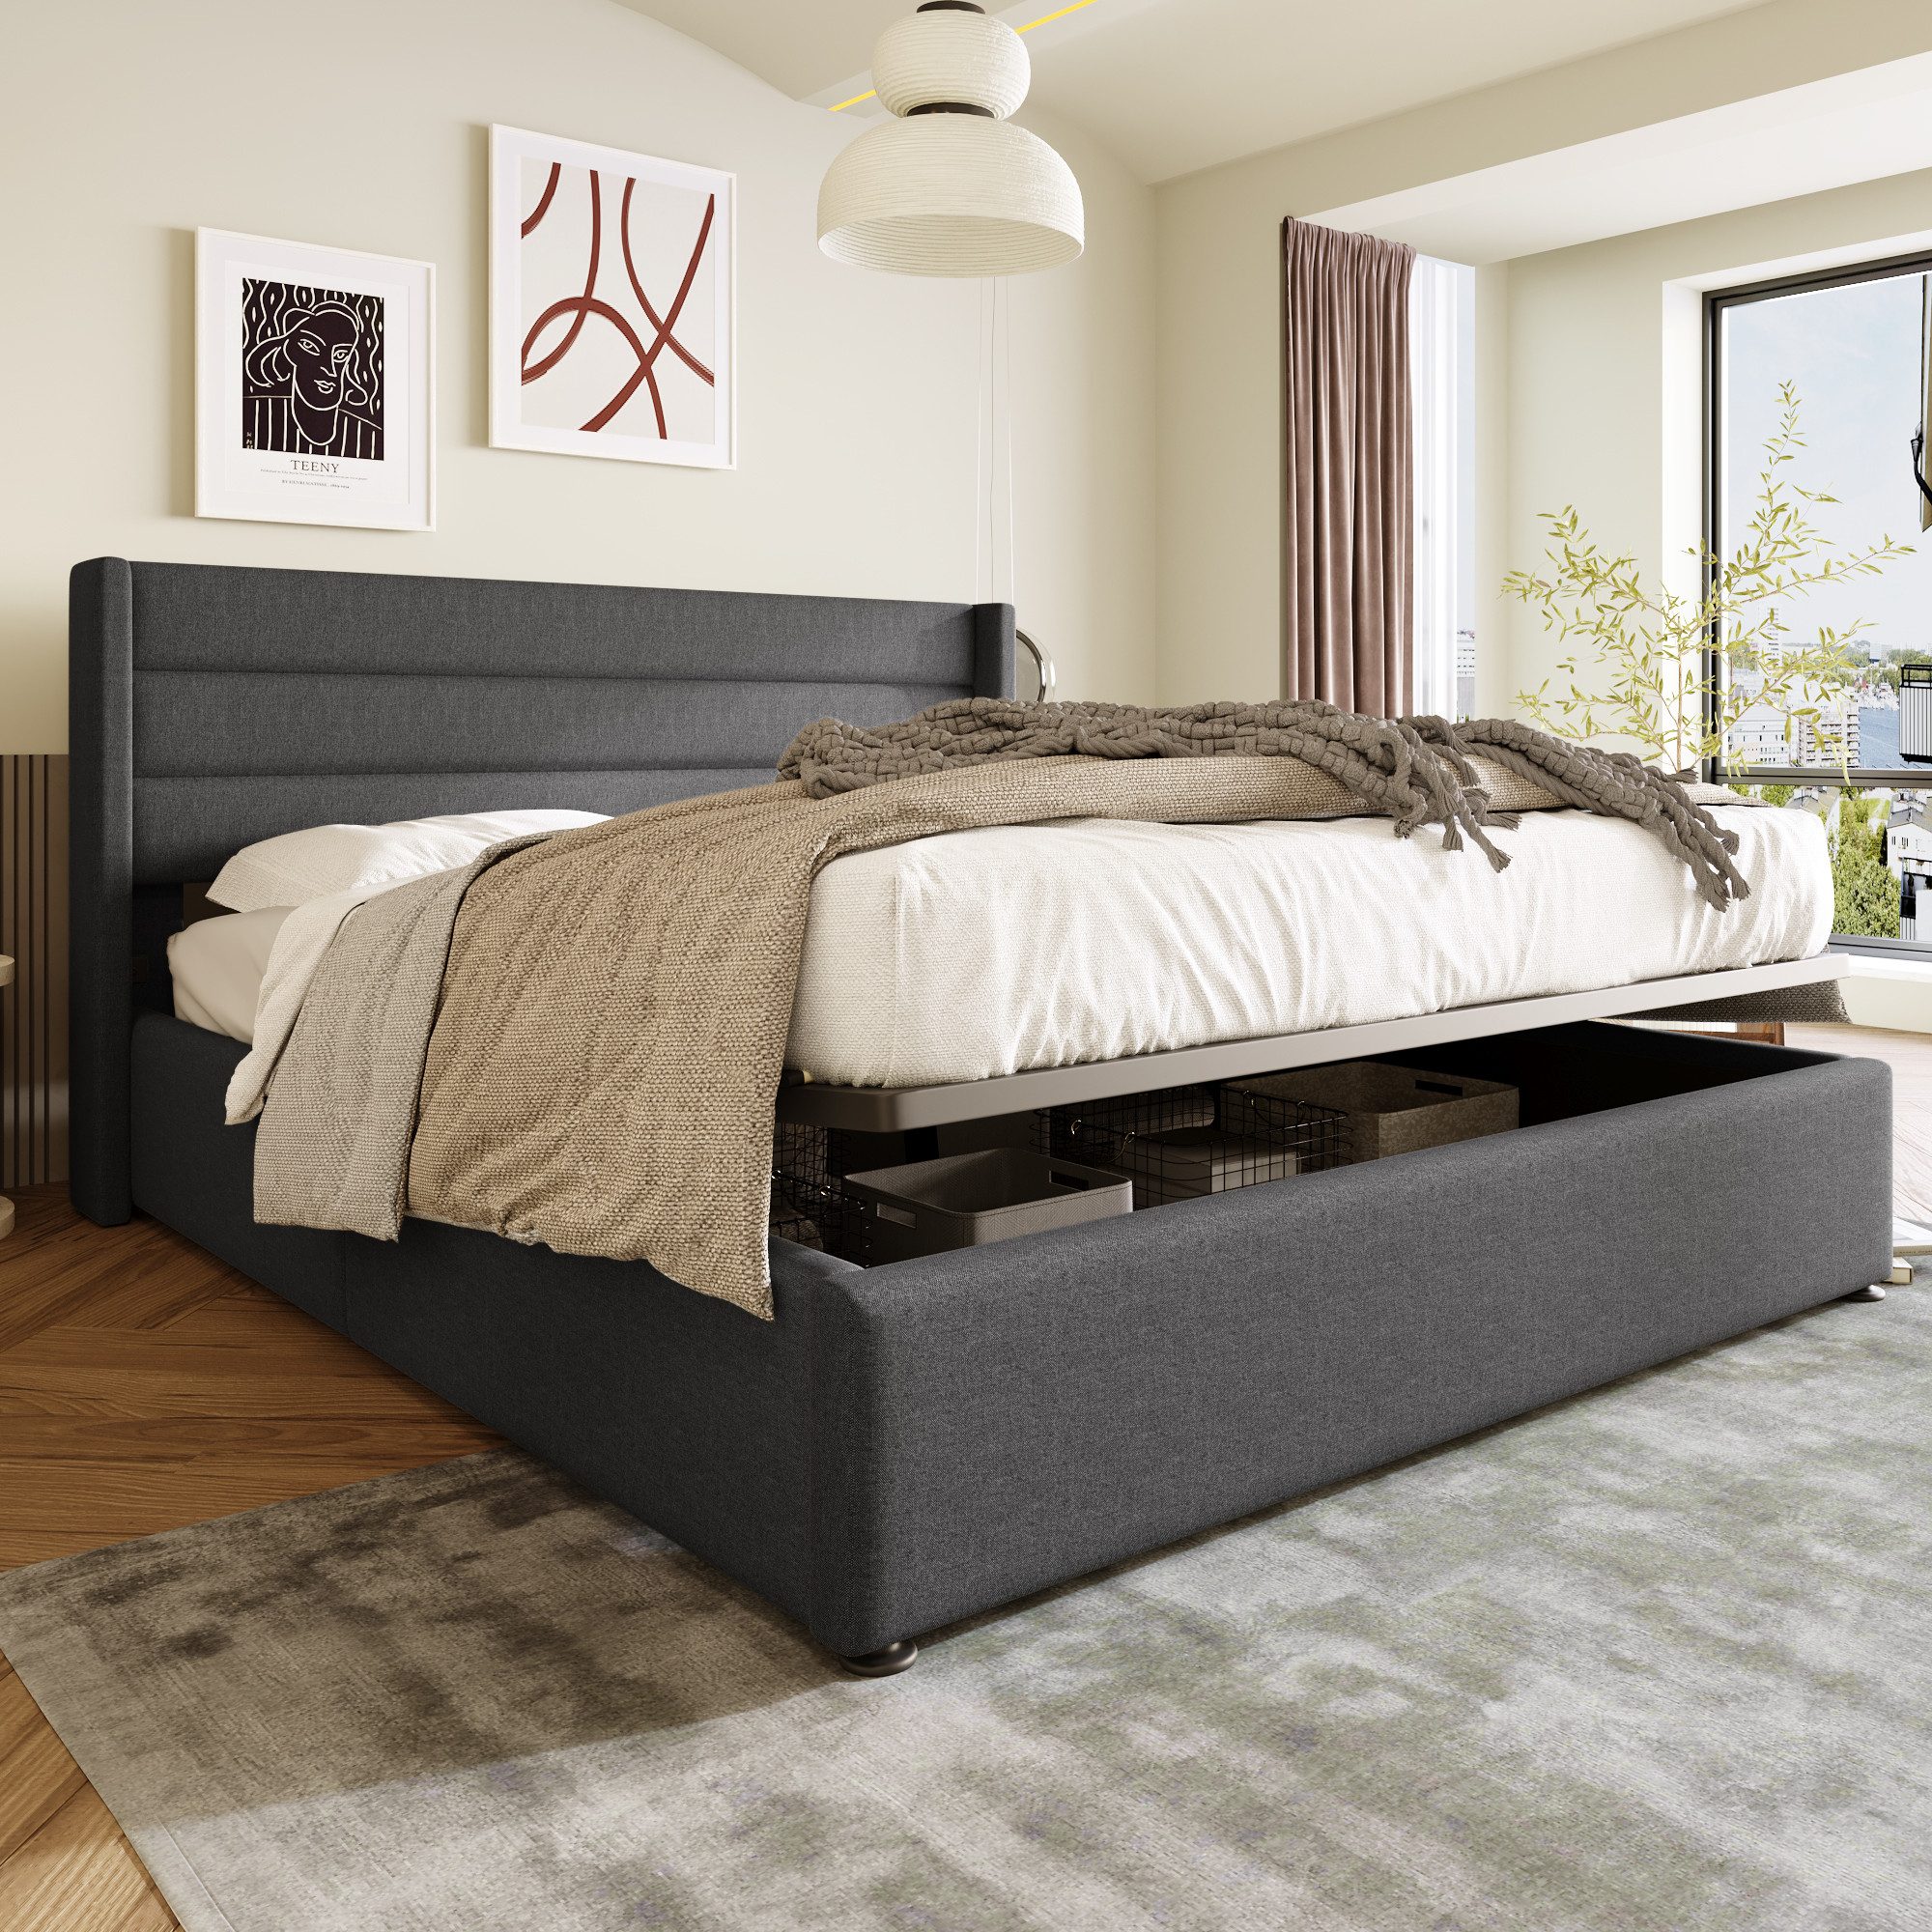 MODFU Polsterbett Stauraumbett Doppelbett, Bett mit Lattenrost aus Metallrahmen, Lattenrost aus Holz